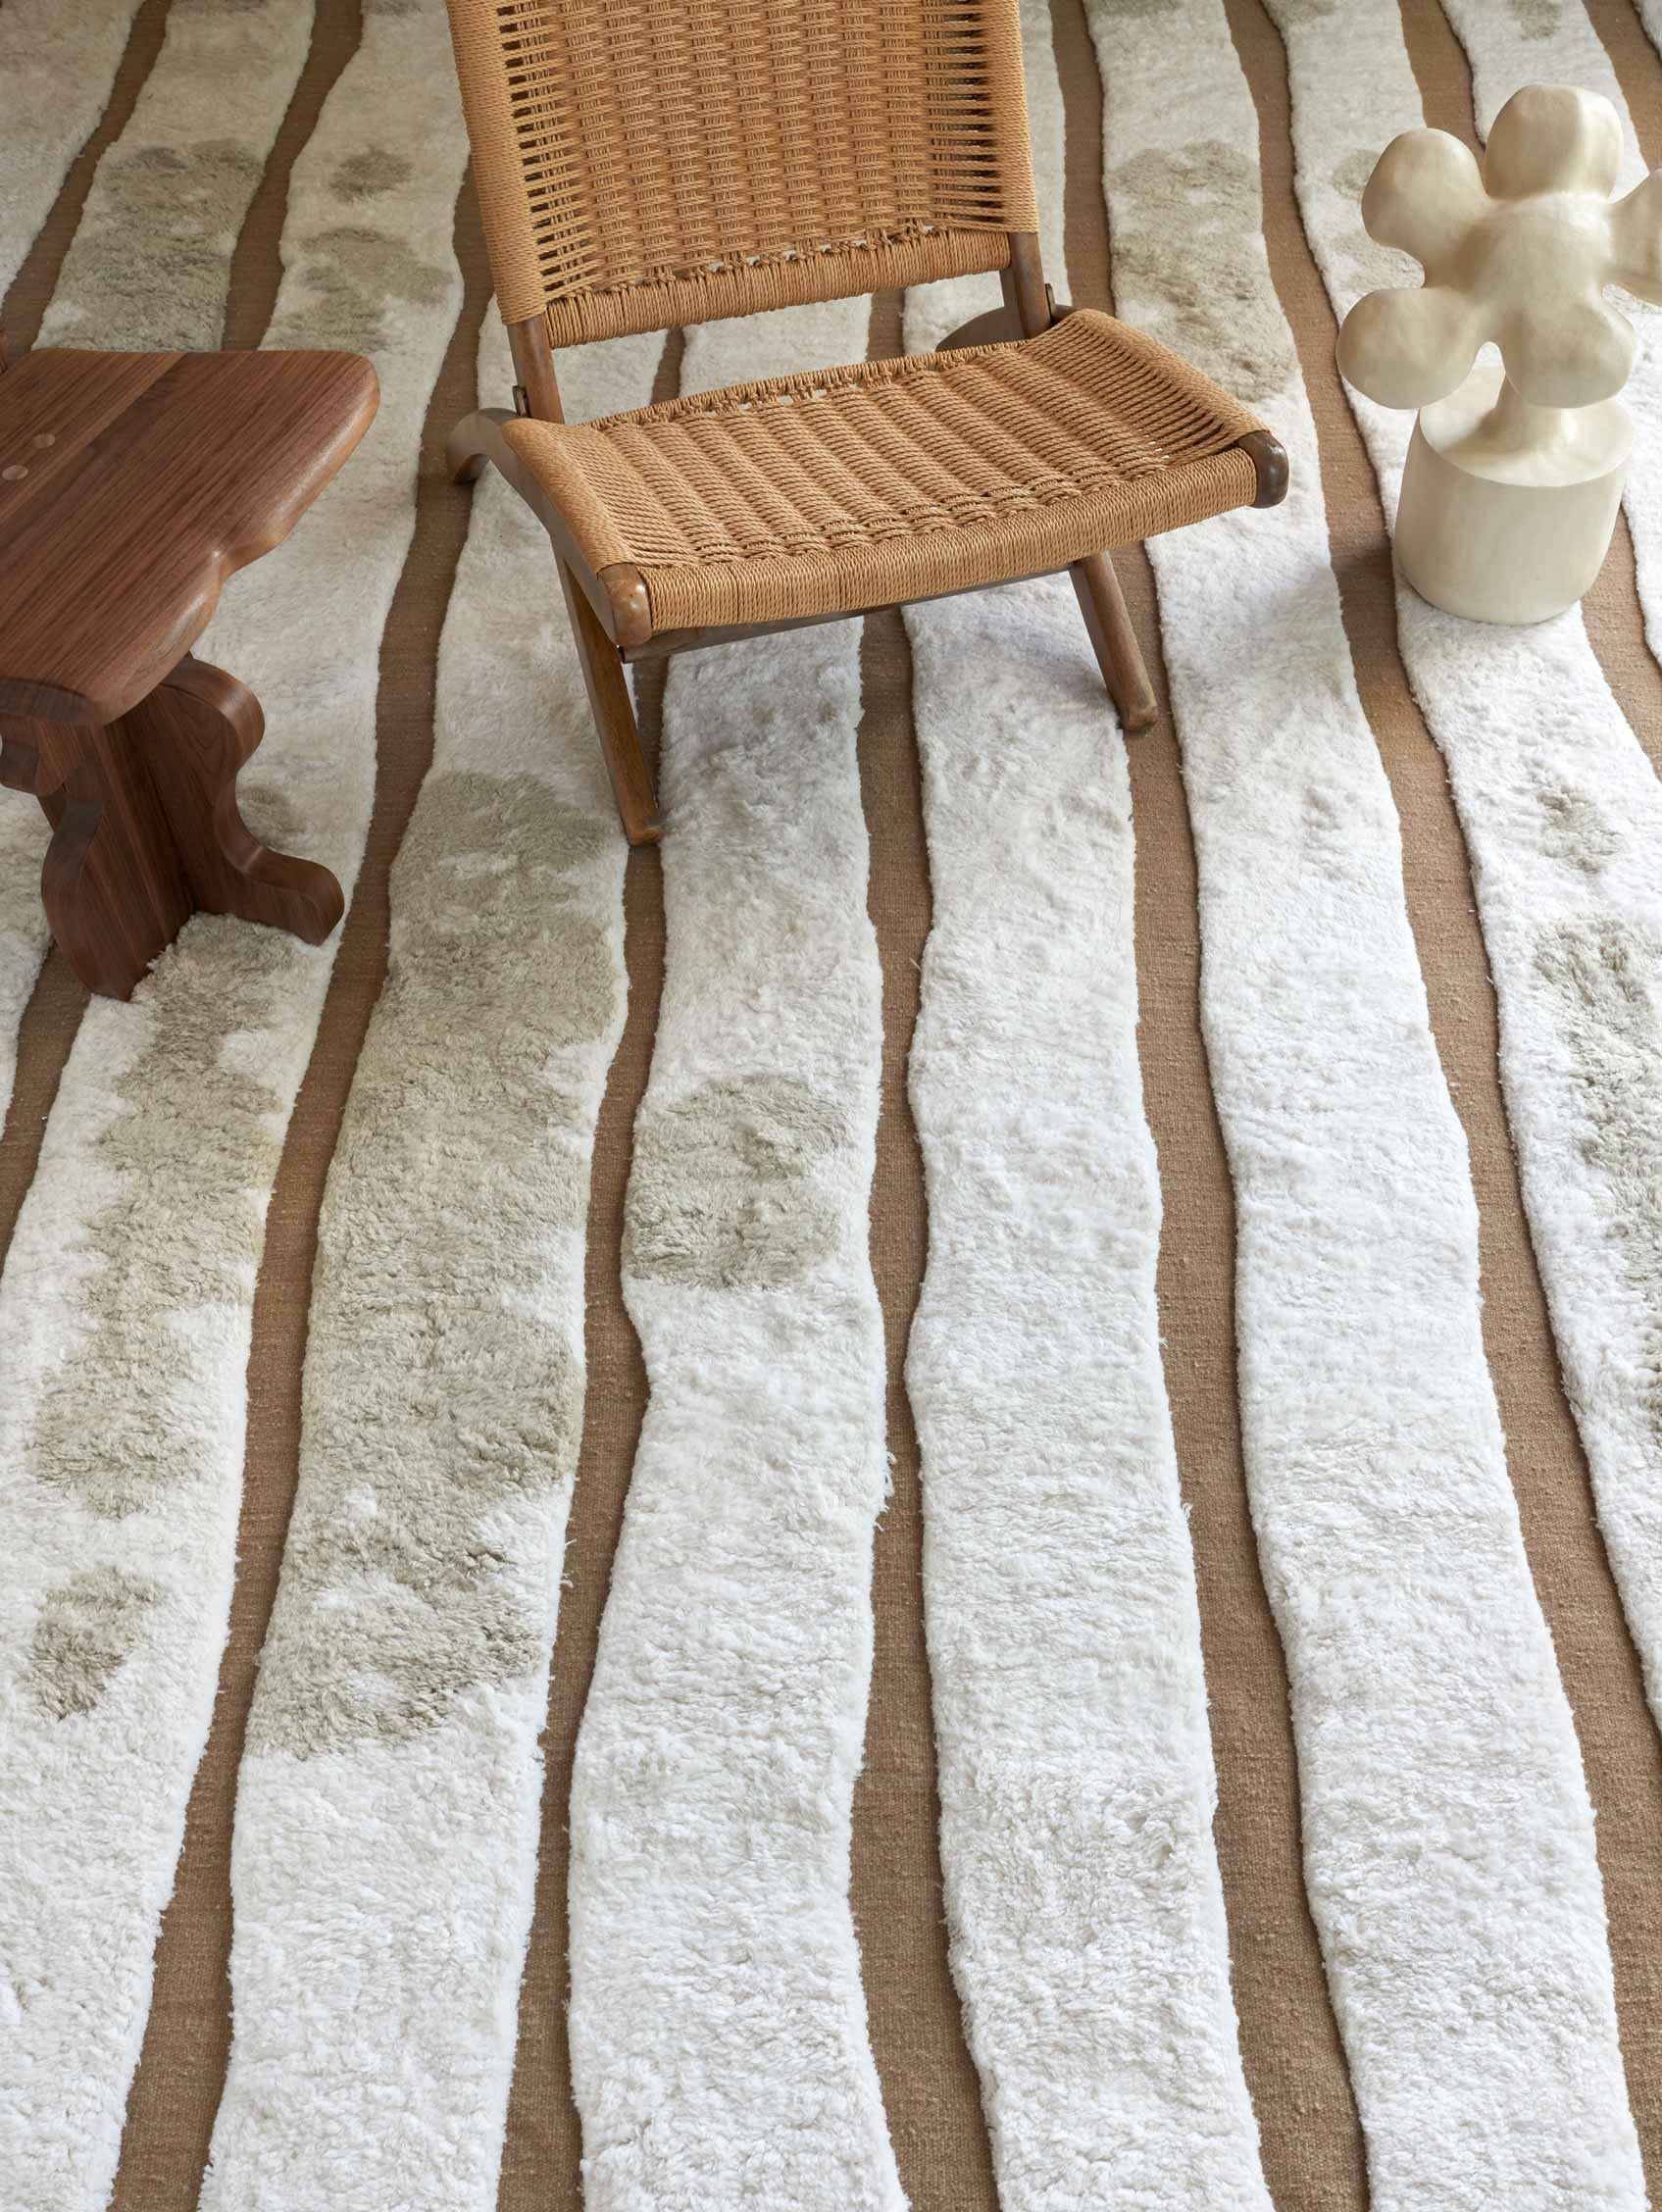 Muster des Teppichs: Bold Stripe - Sandstein
MATERIAL: Merino Wool Pile/ New Zealand Wool Flat-weave
Qualität: Wolle Flachgewebe & marokkanischer Flor, 20mm Flor, handgewebt 
Größe: 8'-0